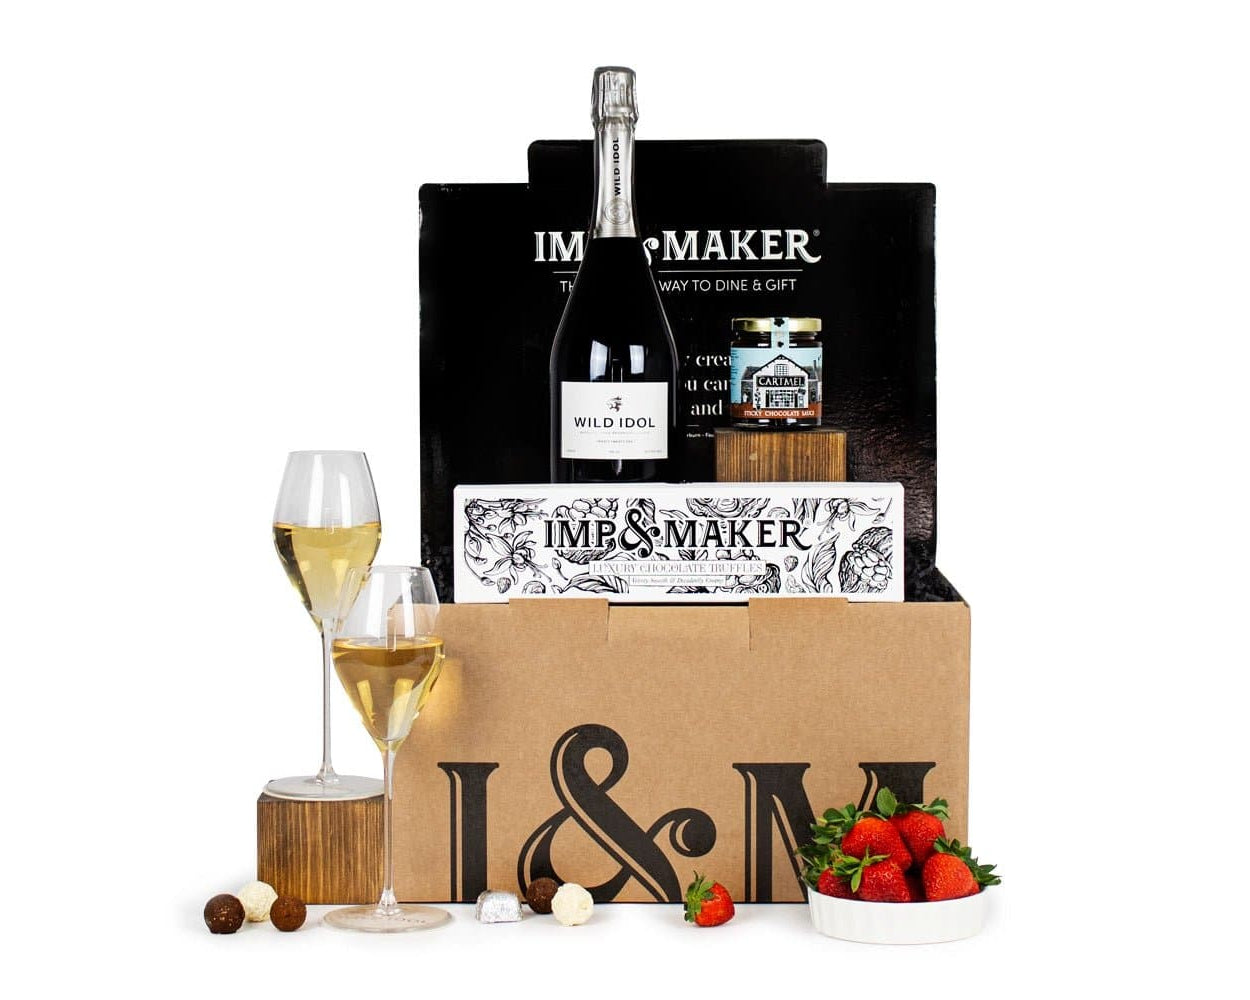 Wild Idol Alcohol-Free White Wine Gift Box - IMP & MAKER